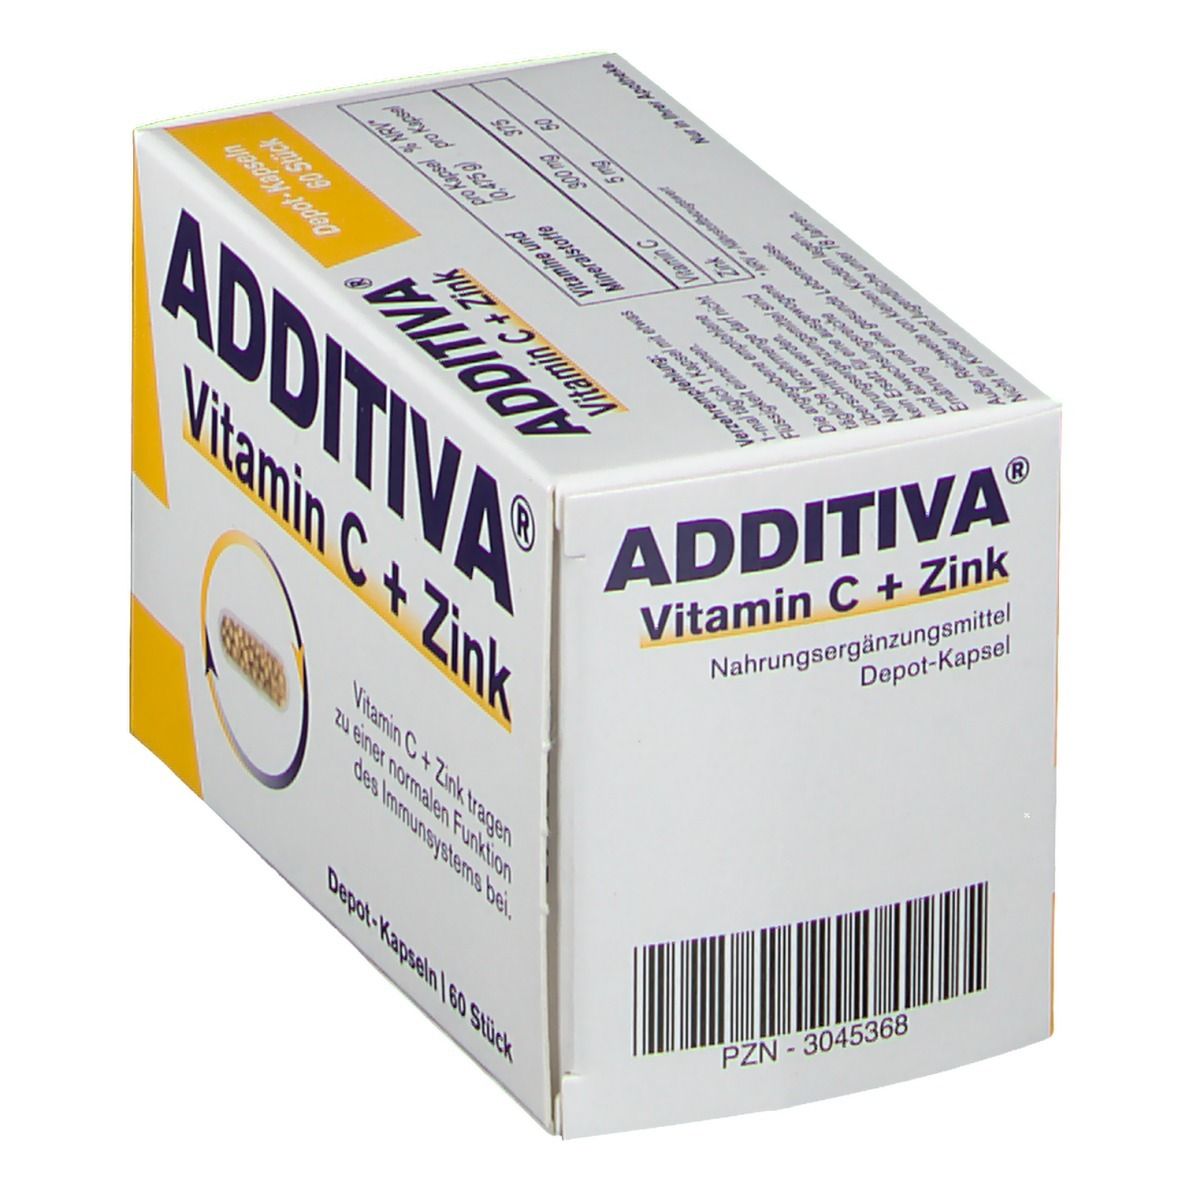 ADDITIVA® Vitamine C + Zinc Depot 300 mg capsules